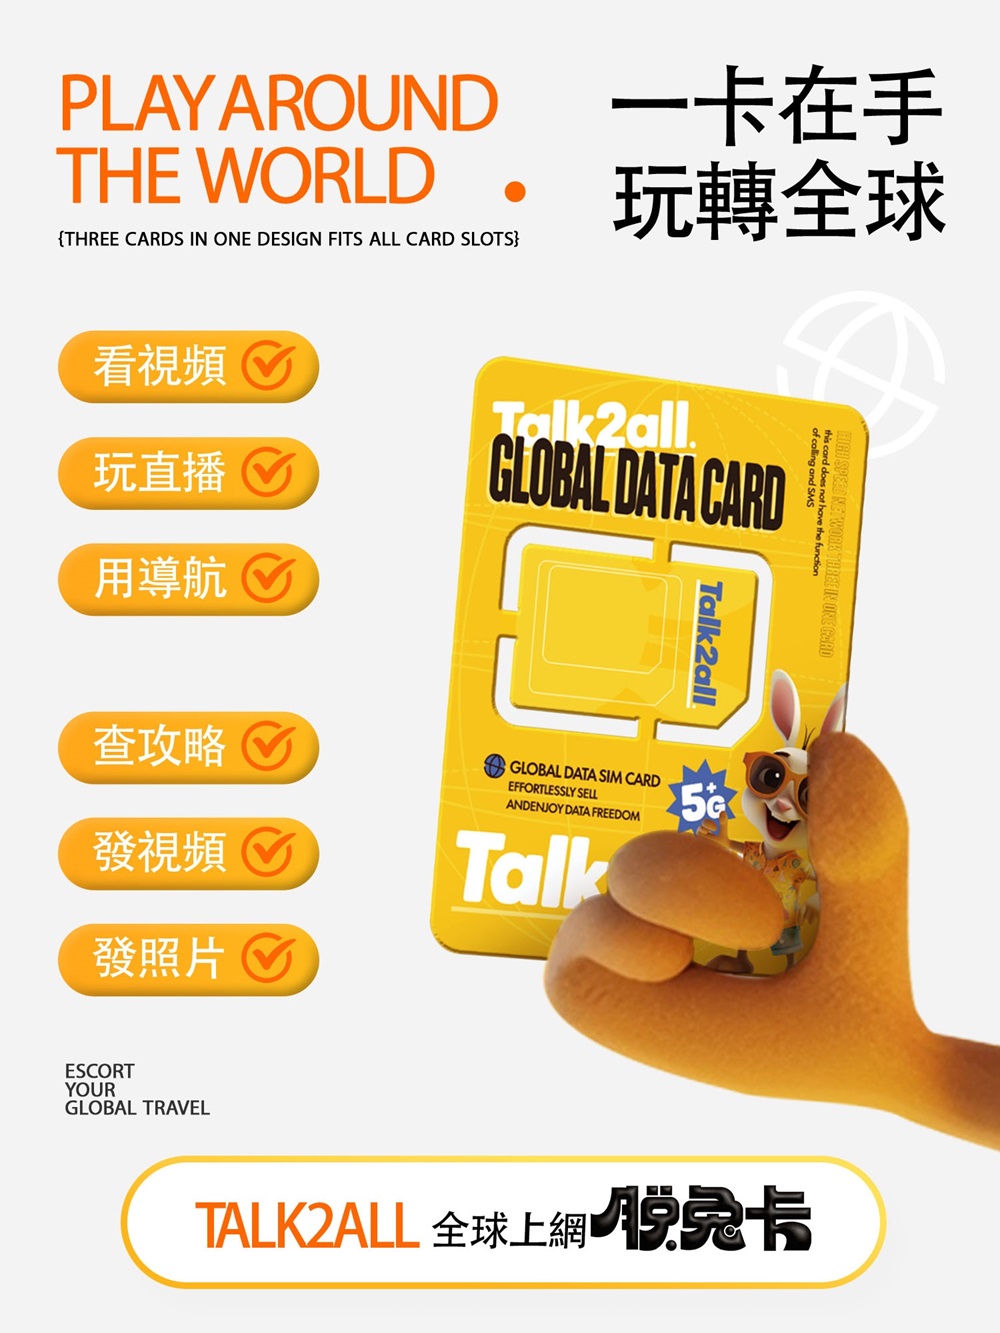 Talk2all脫兔卡 日本上網卡5天每日1GB高速網路過量